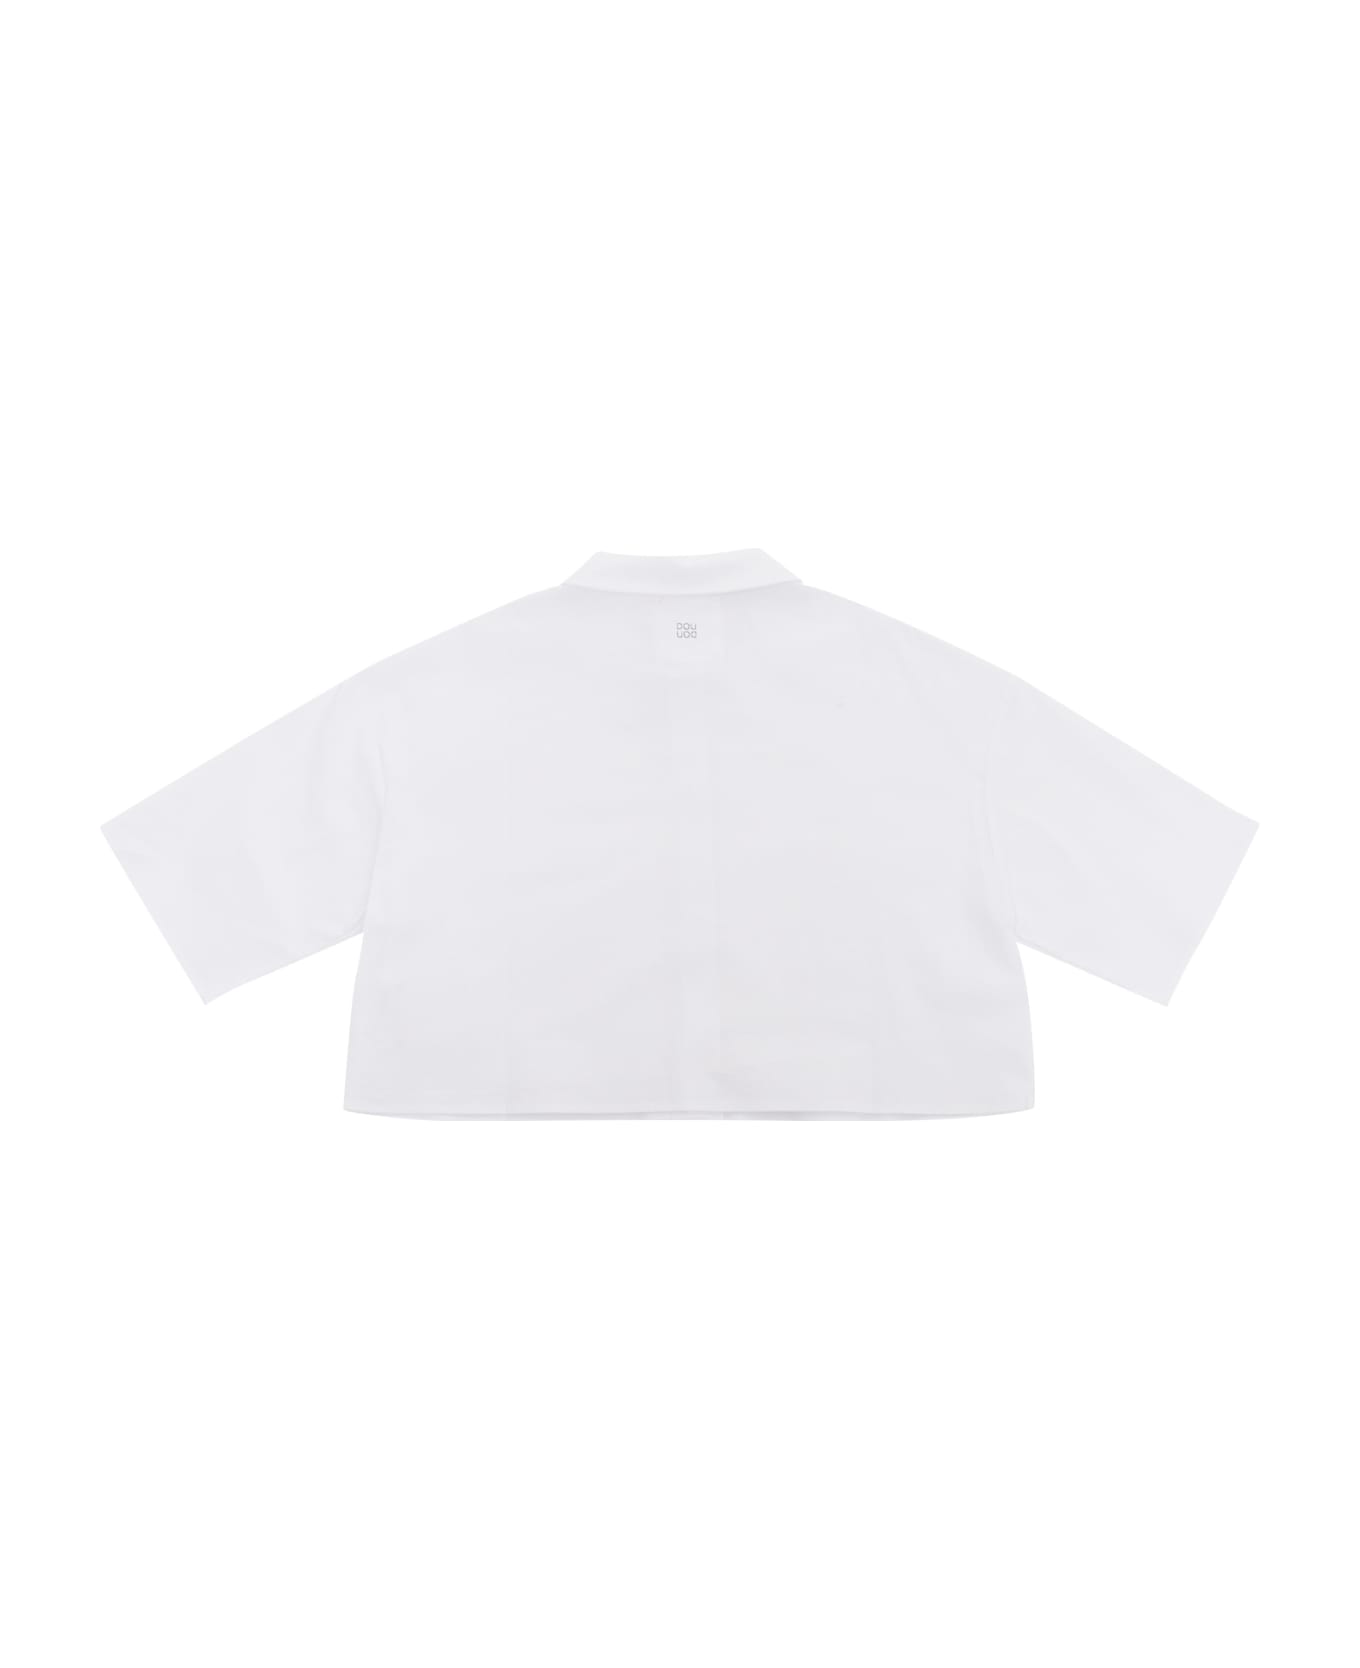 Douuod White Cropped Shirt - WHITE